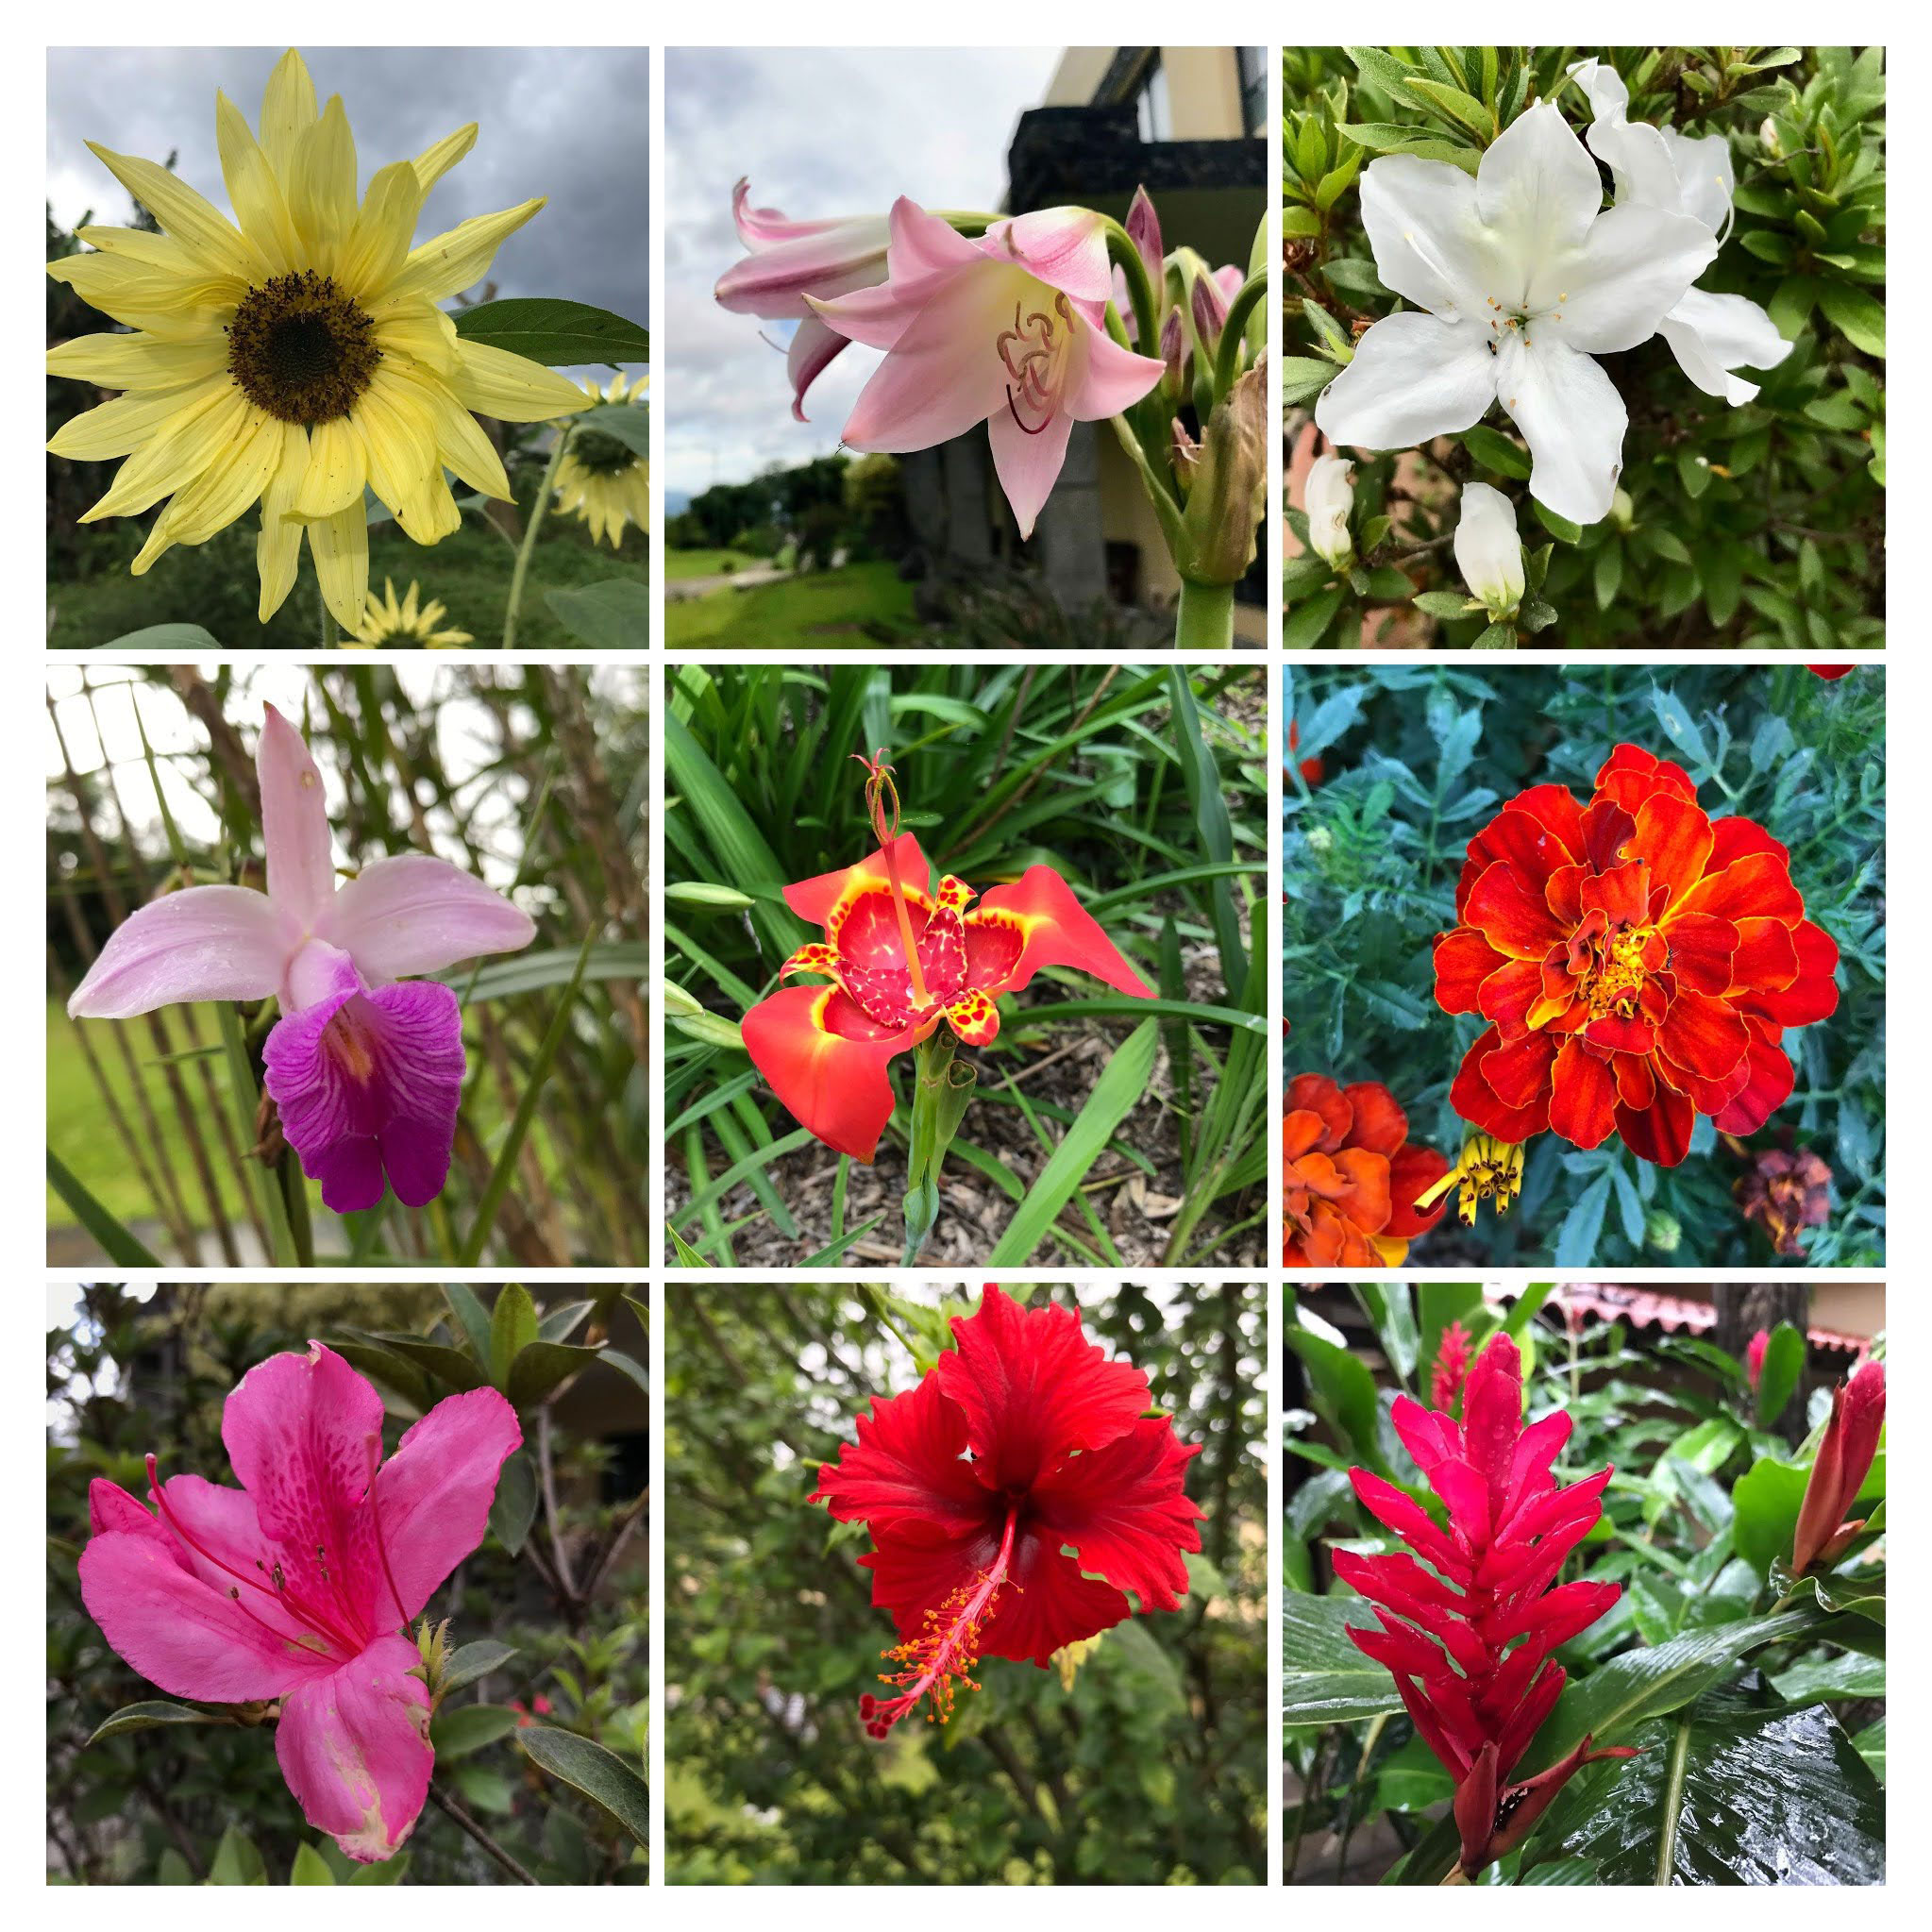 Flower variety and beauty. Costa Rica. Spanish: Variedad y belleza floral.